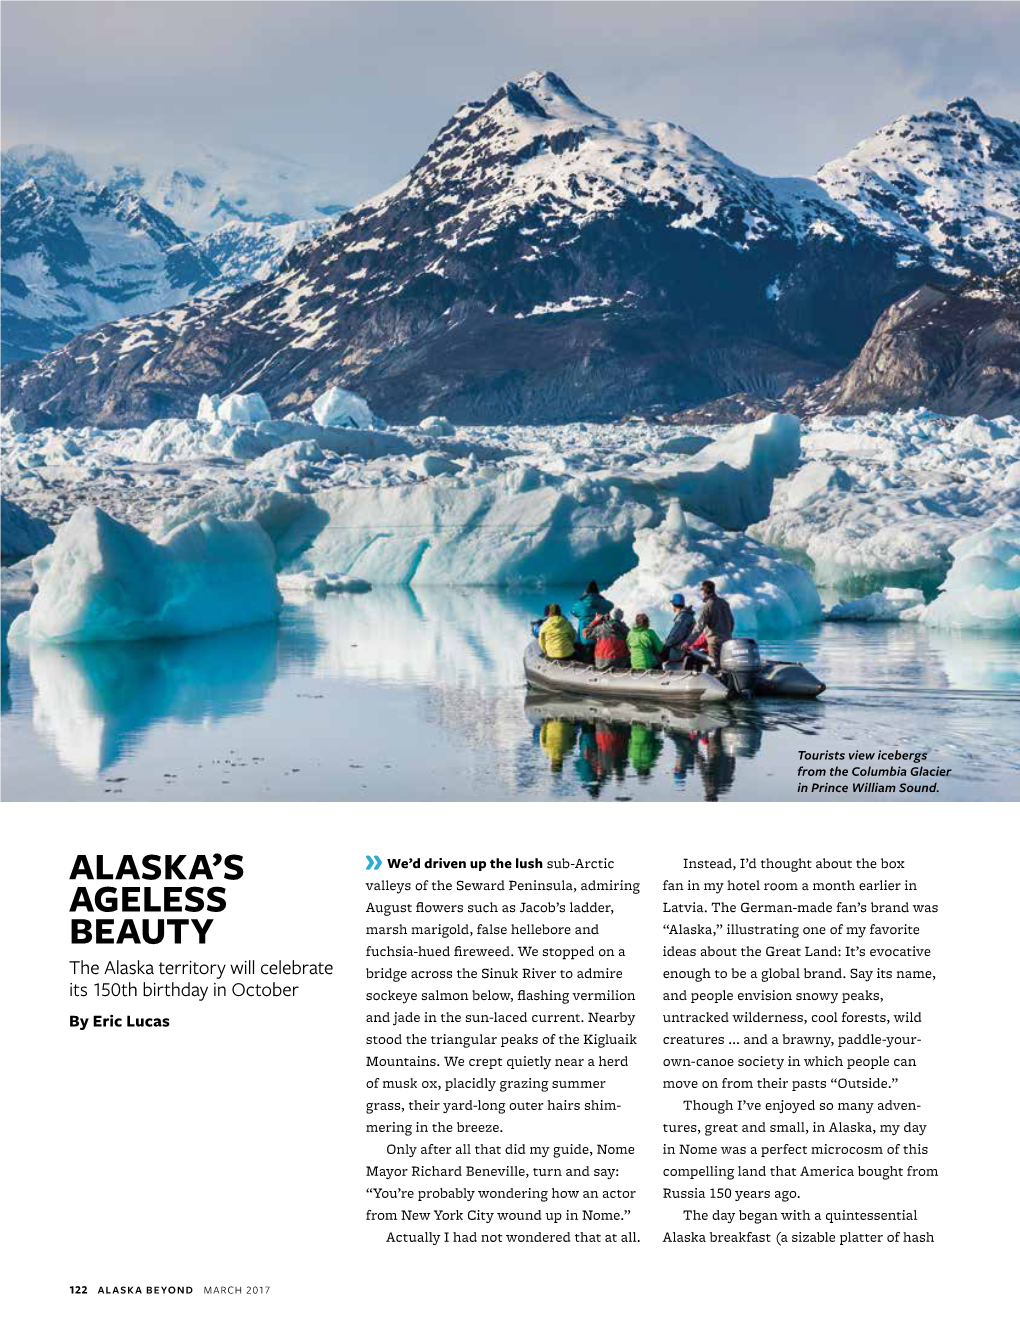 Alaska's Ageless Beauty